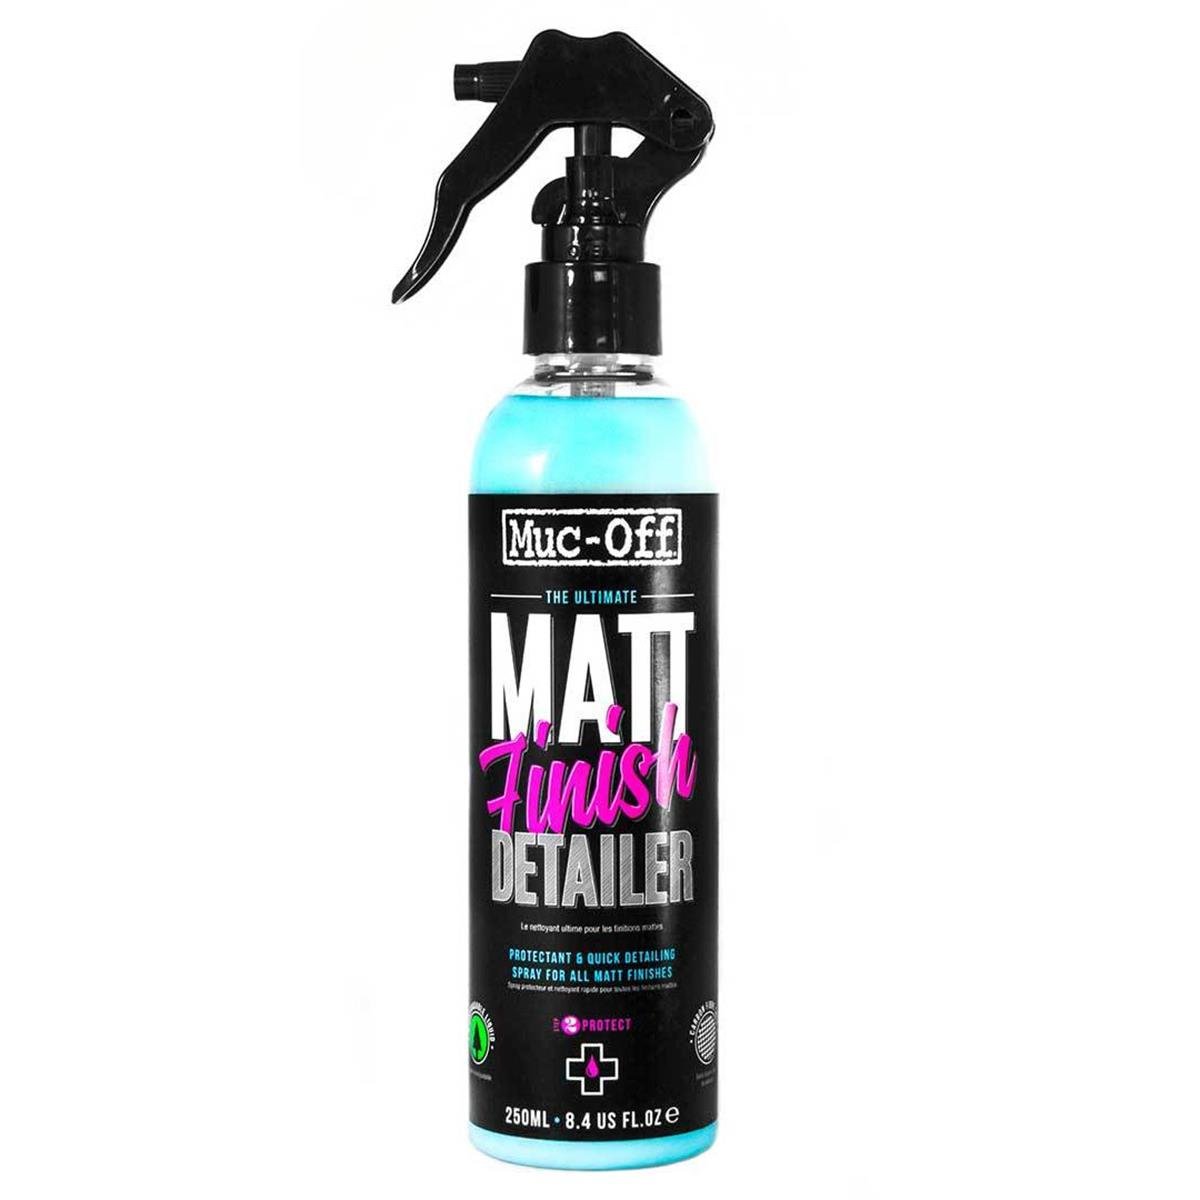 Muc-Off Spray pulizia Matt Finish Detailer 250 ml